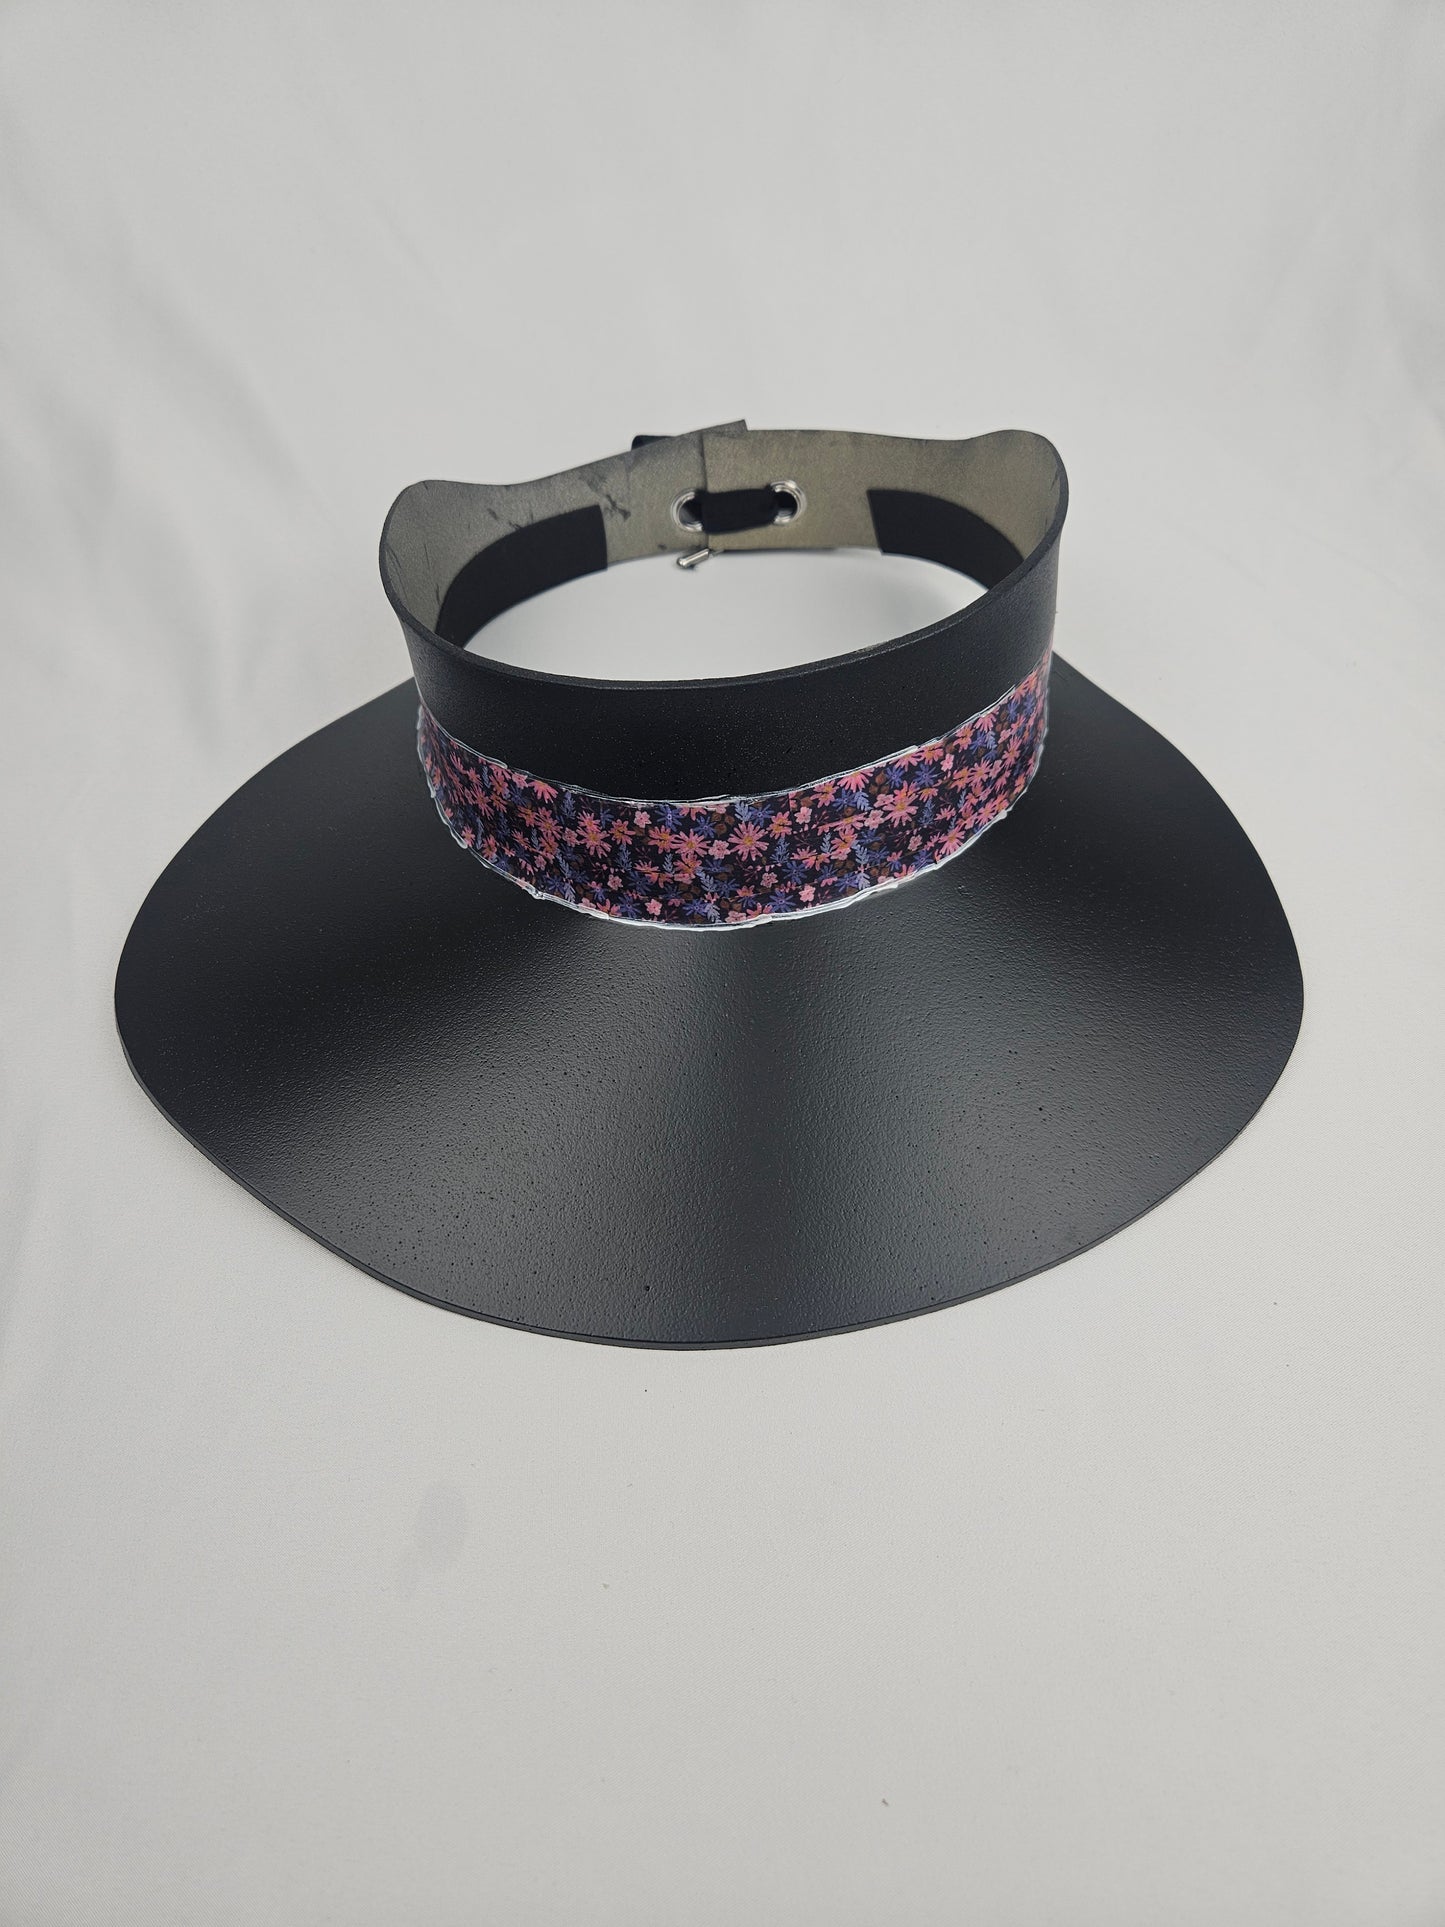 Timeless Black Audrey Foam Sun Visor Hat with Cute Pink and Purple Floral Band: 1950s, Walks, Brunch, Tea, Golf, Wedding, Church, No Headache, Easter, Pool, Beach